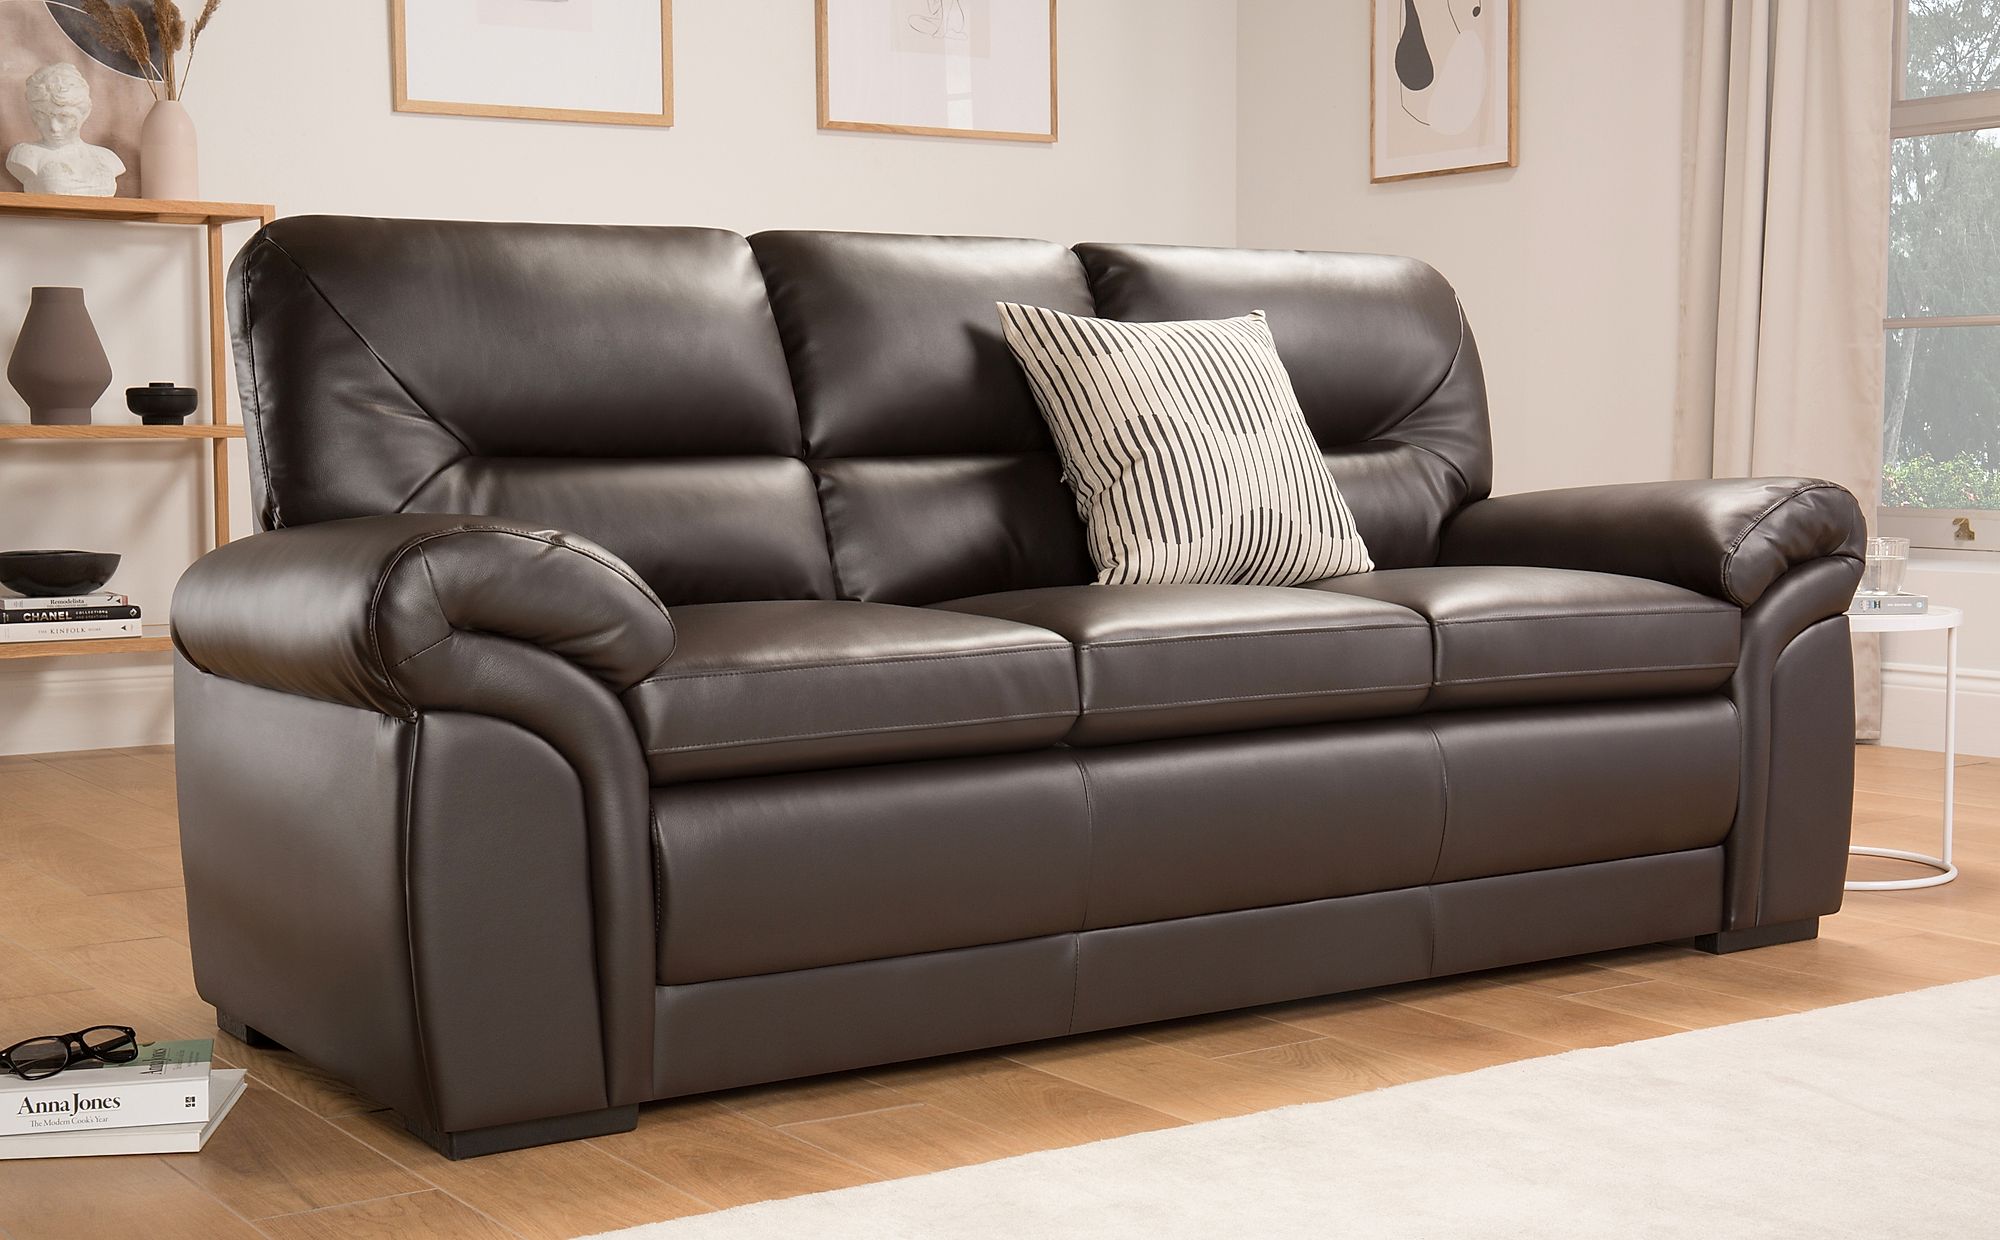 3 seater brown leather sofa ebay